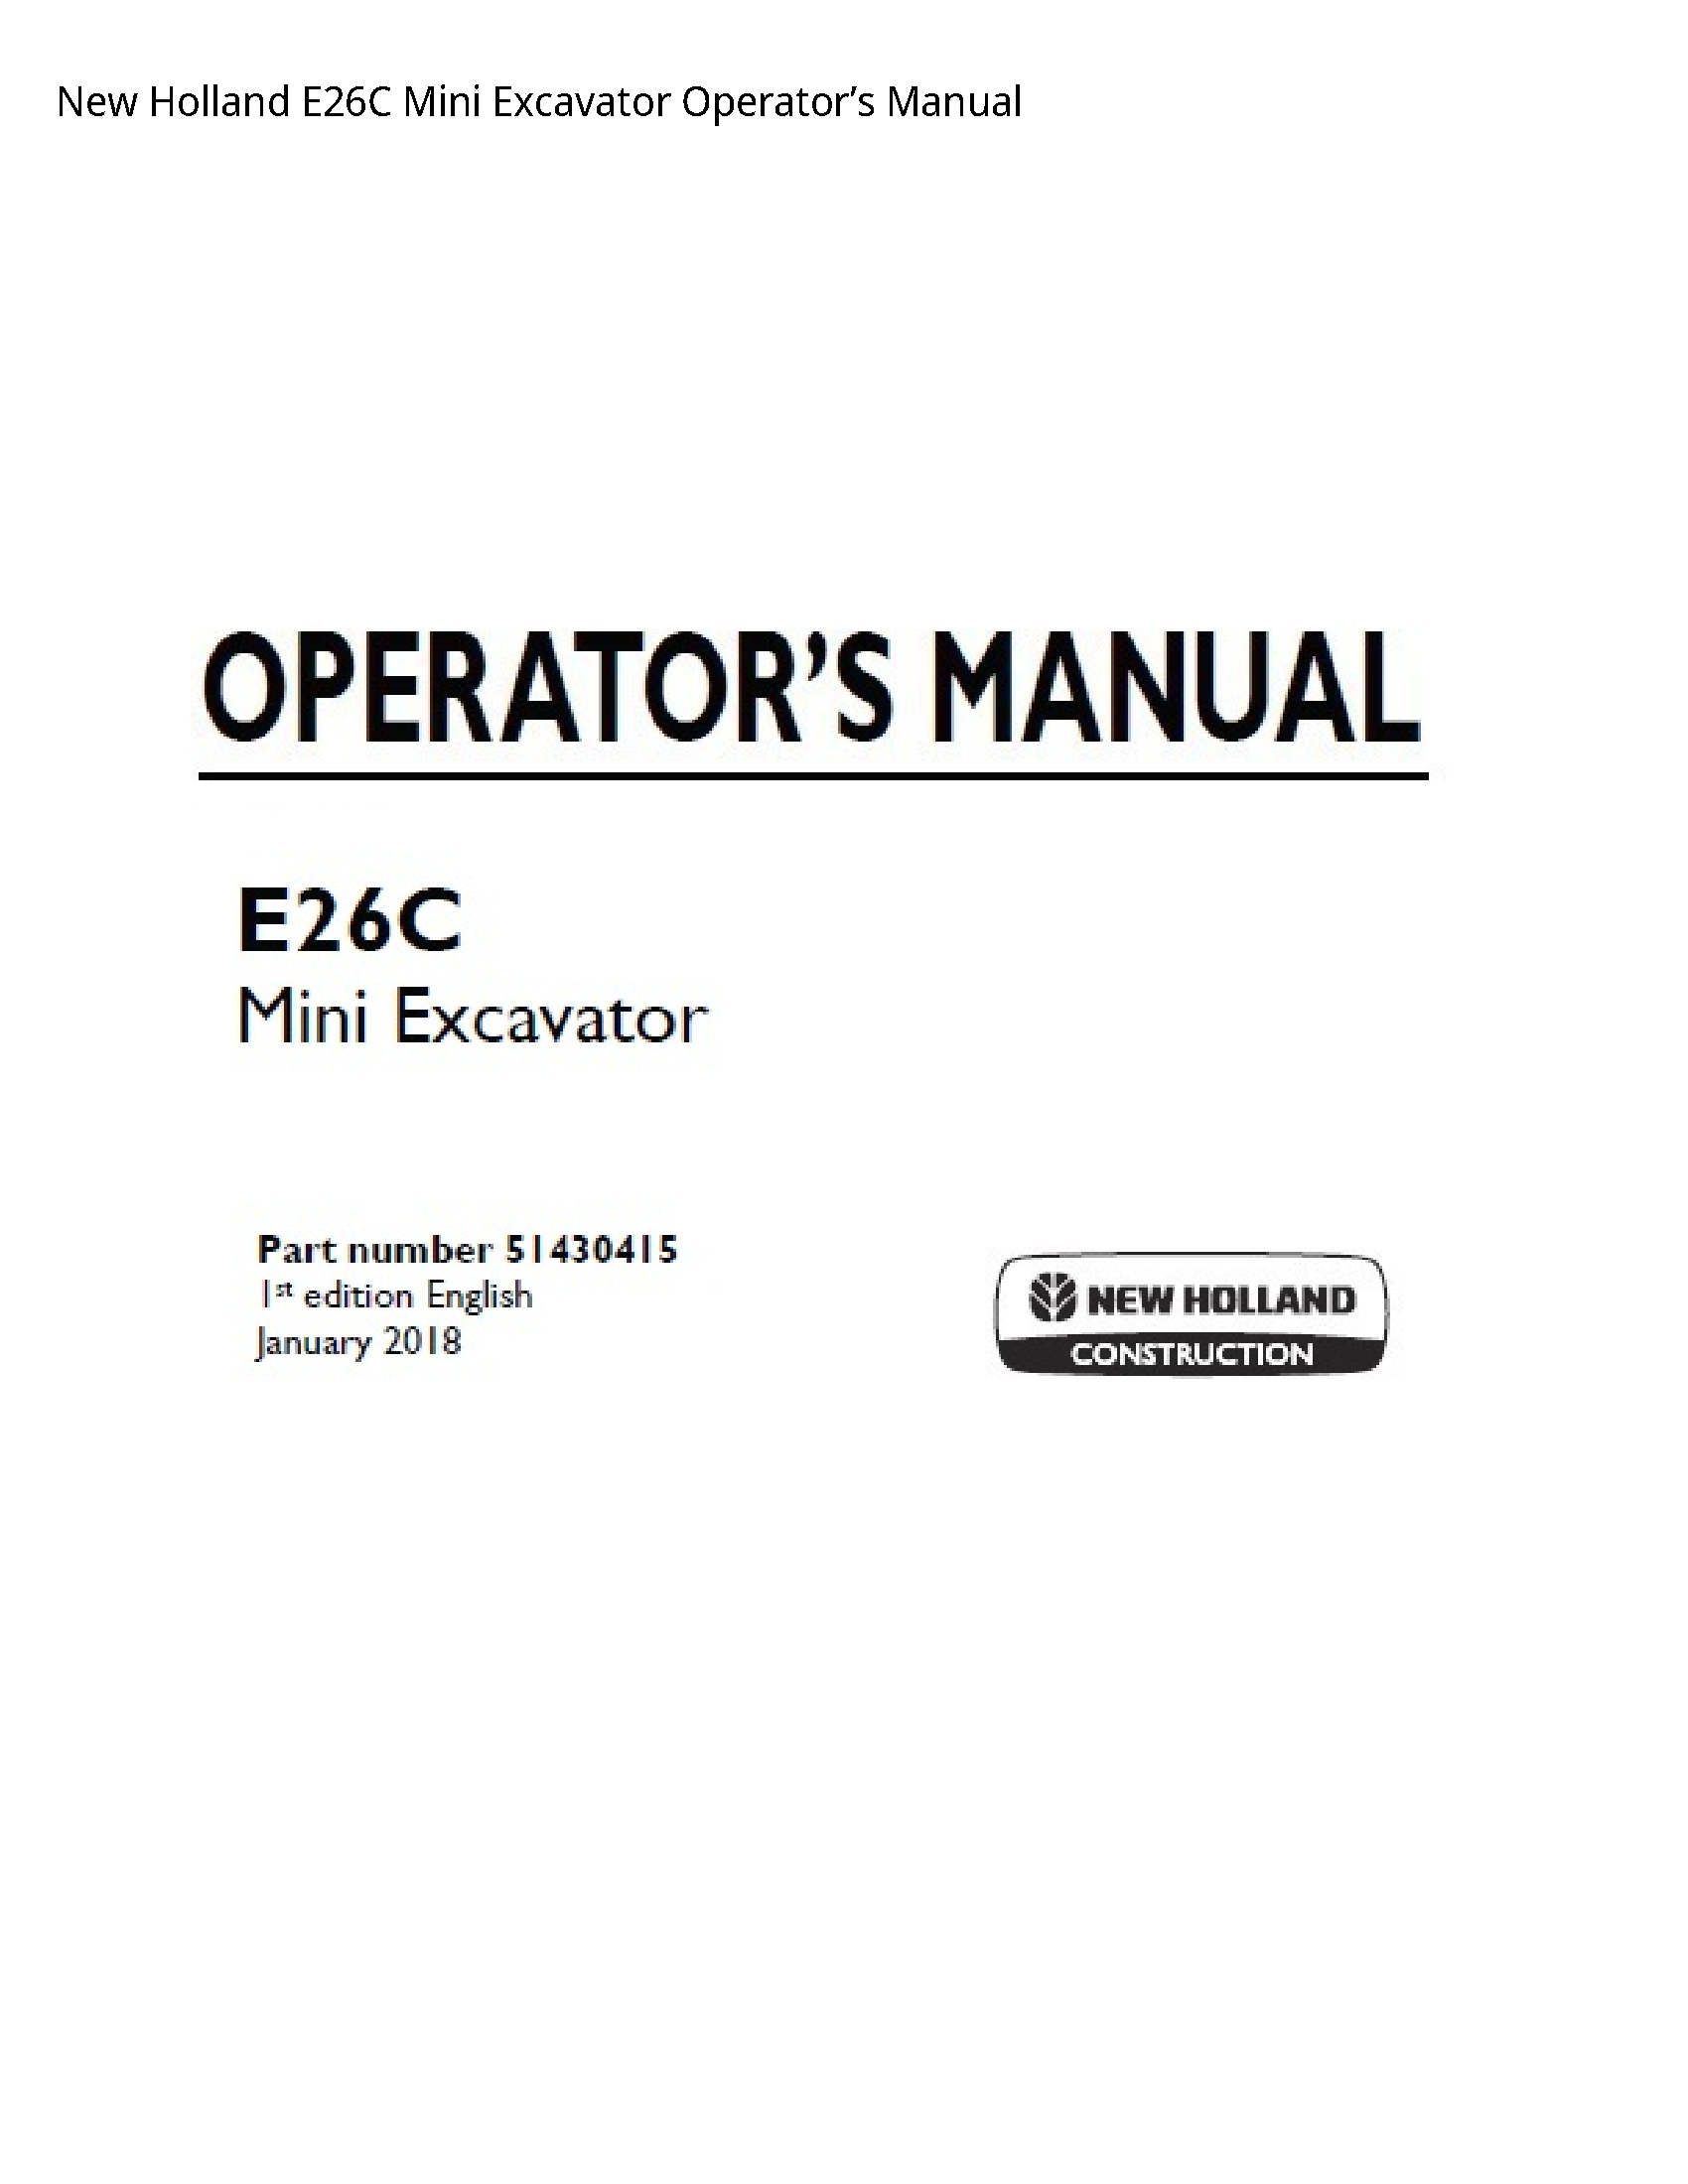 New Holland E26C Mini Excavator Operator’s manual